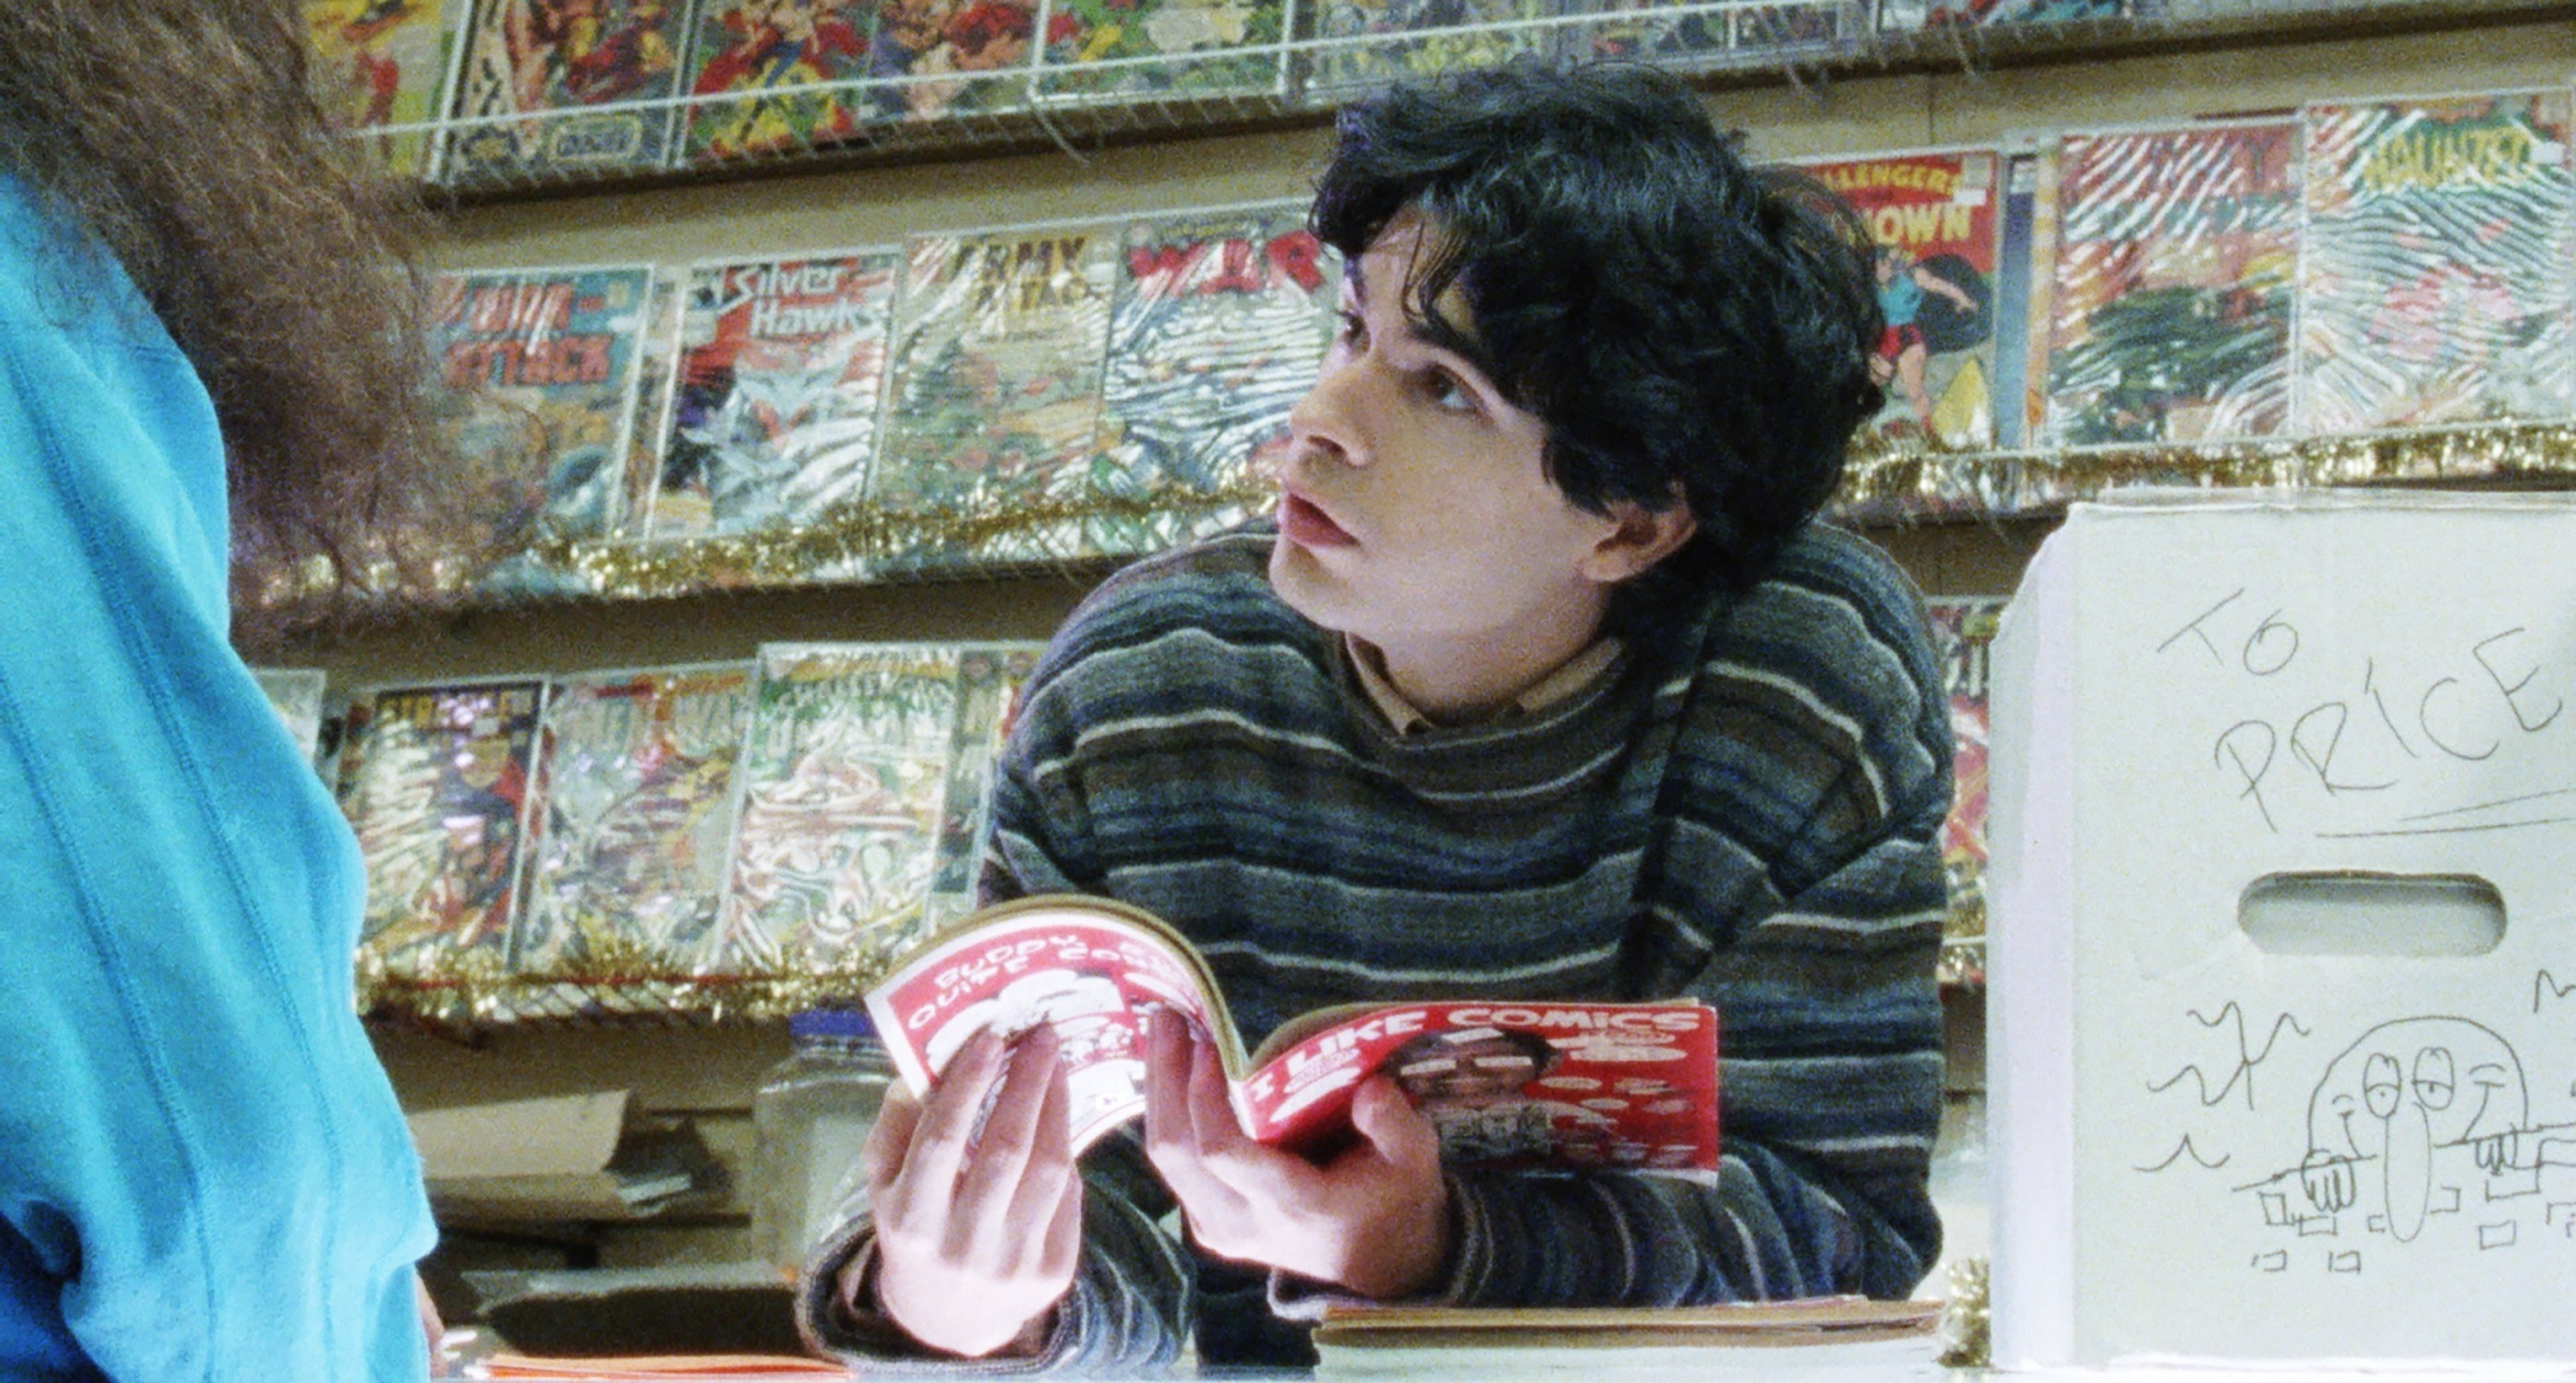 Daniel Zolghadri reads a magazine at a counter